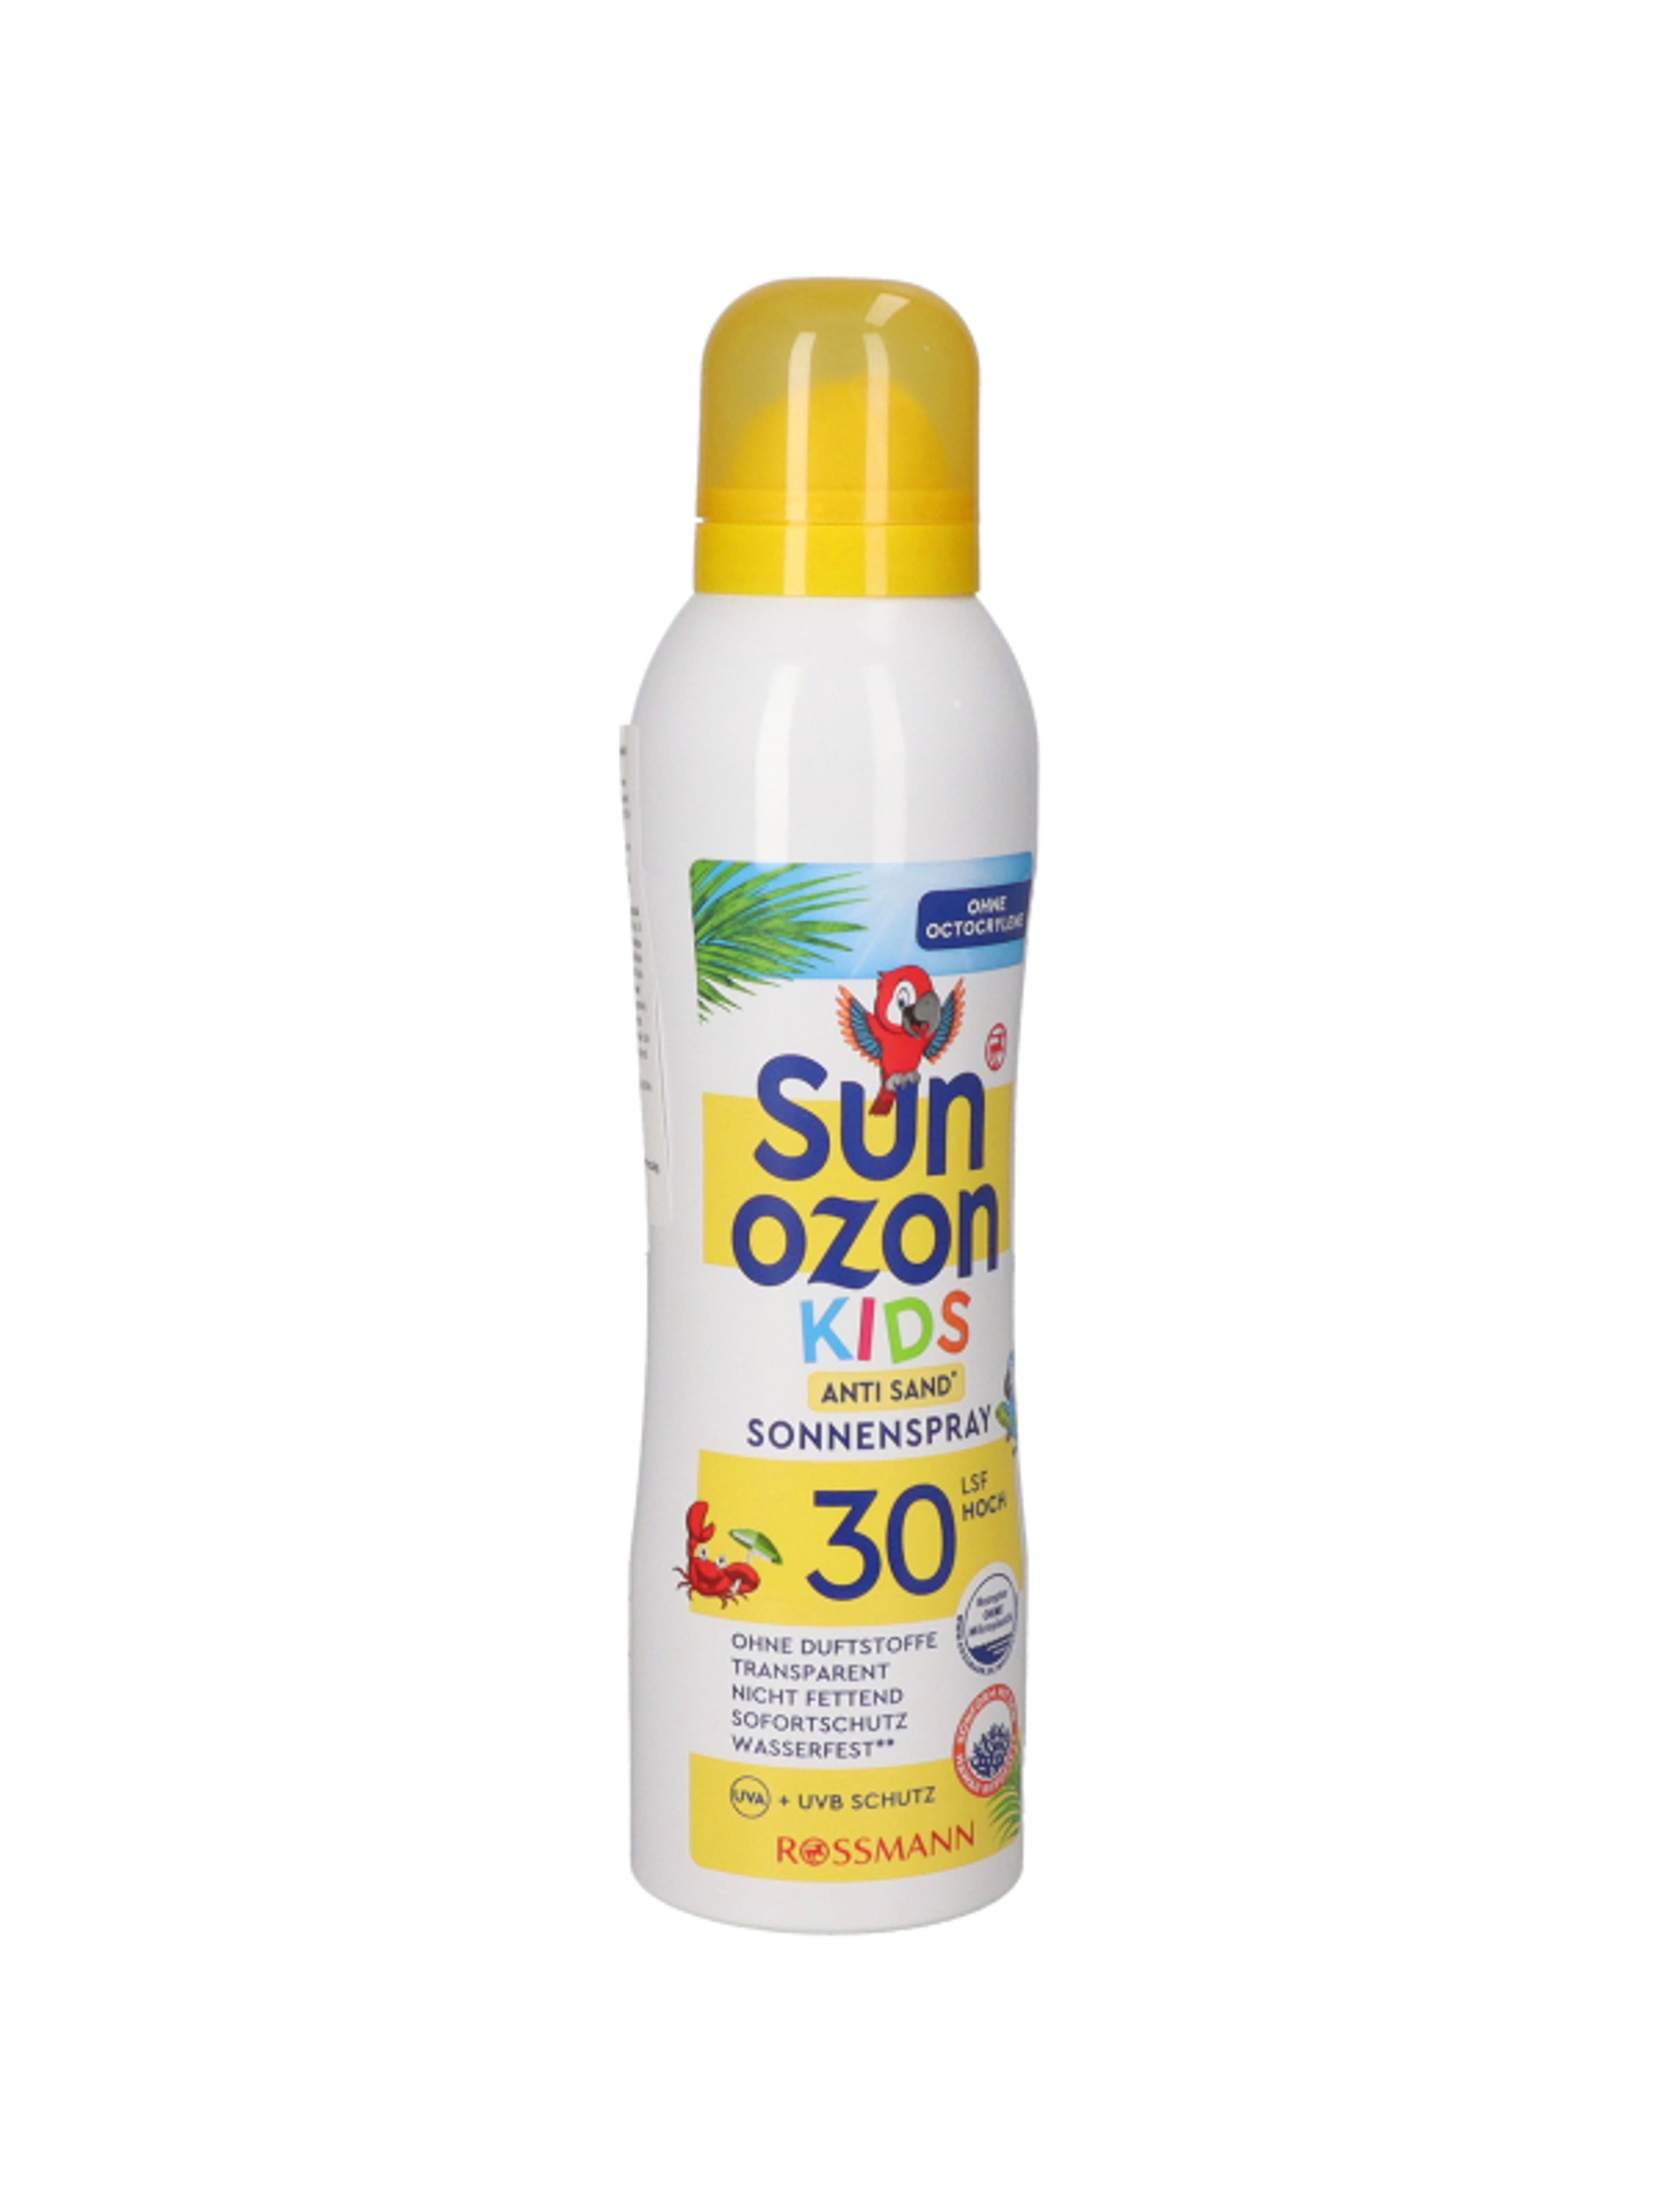 Sunozon kids anti sand 30f aerosol - 200 ml-4